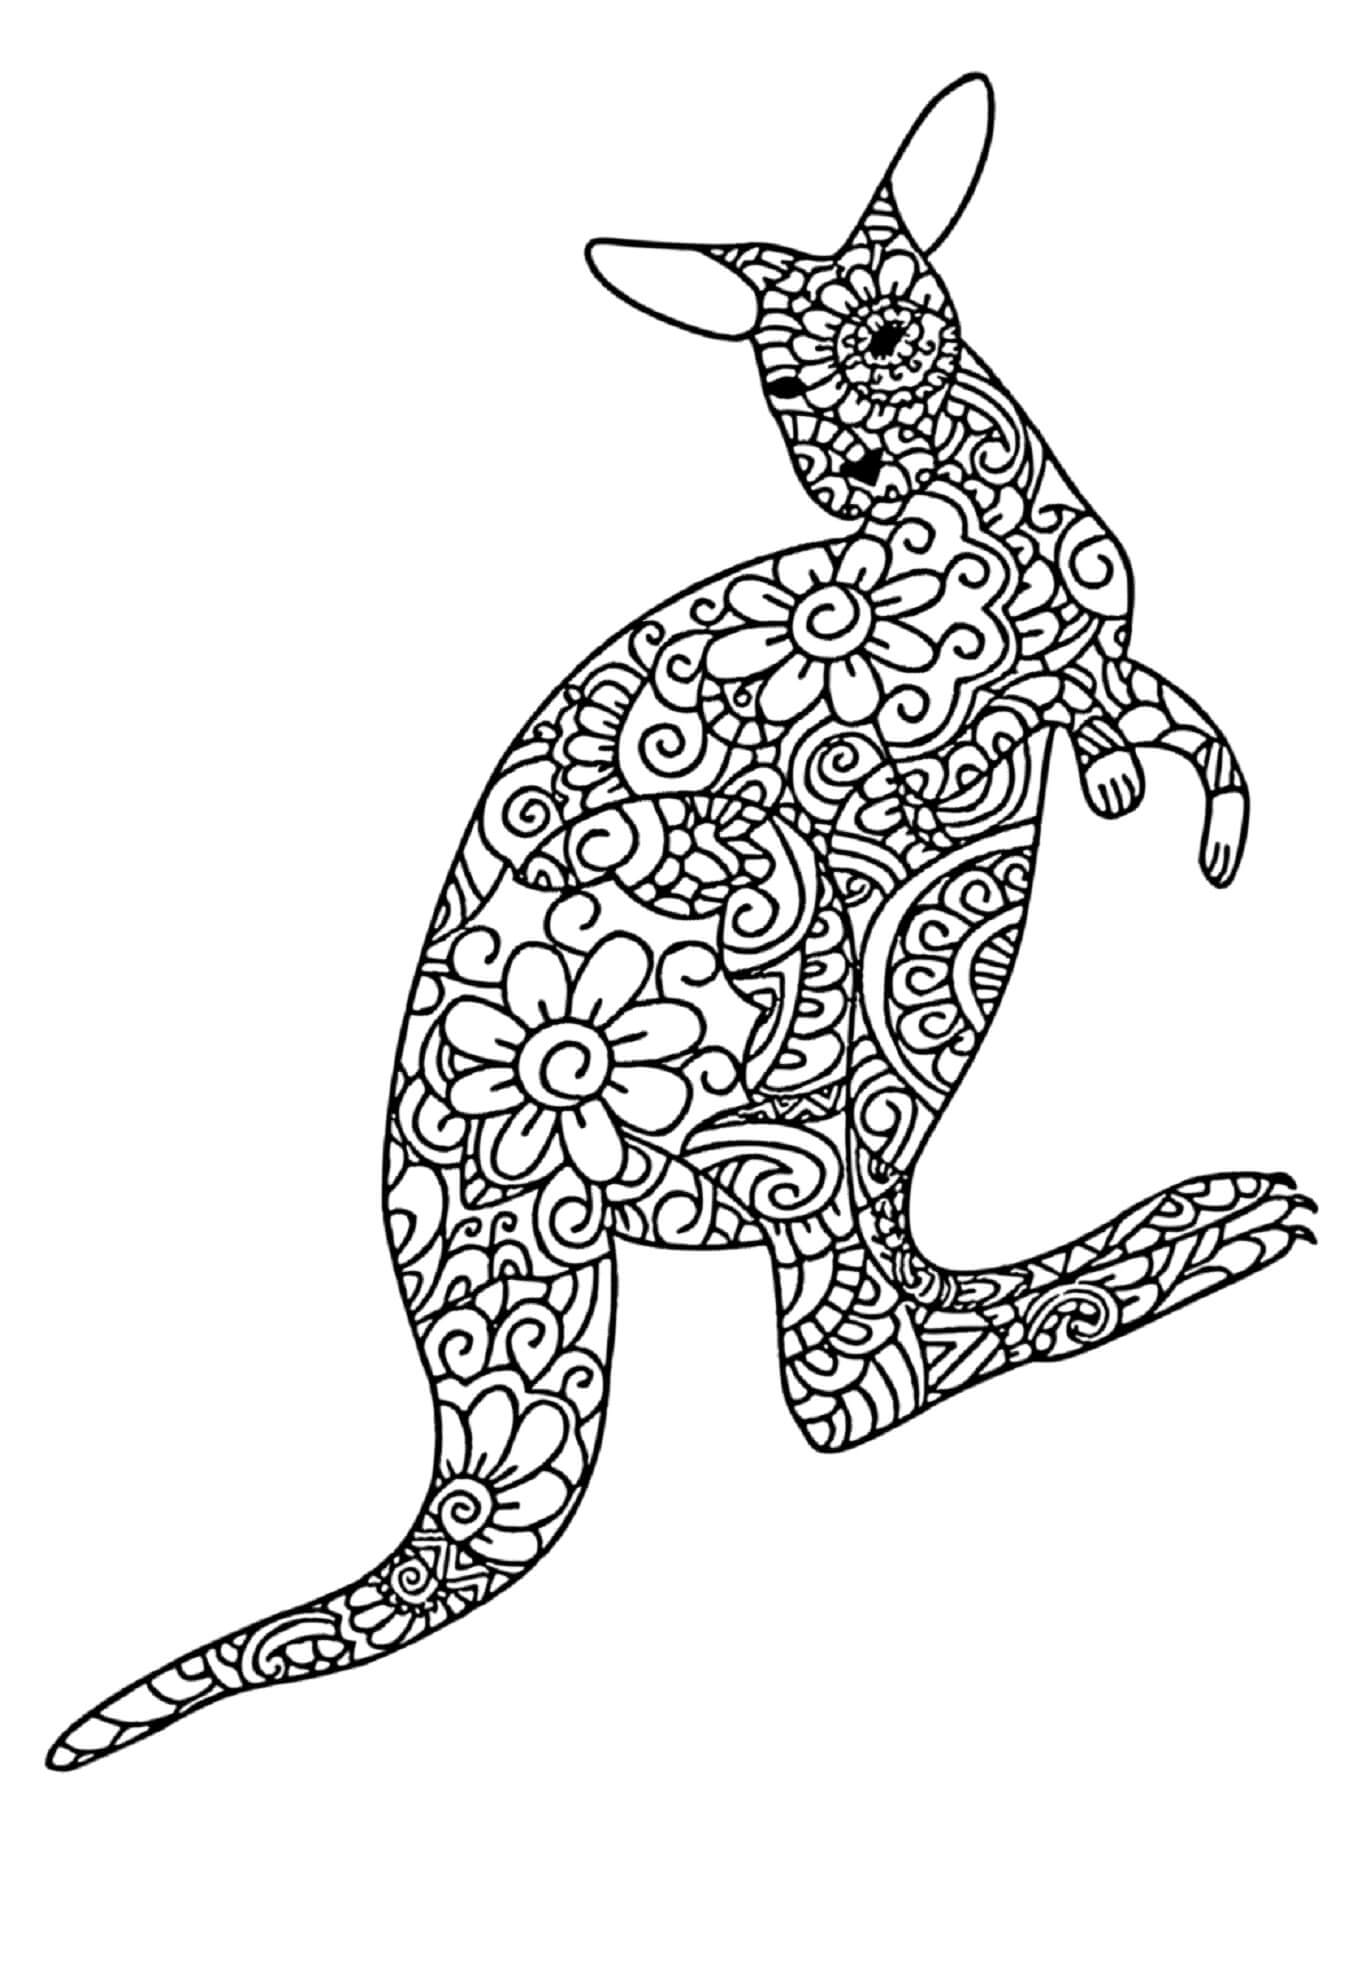 Mandala Kangaroo Coloring Page - Sheet 2 Mandalas